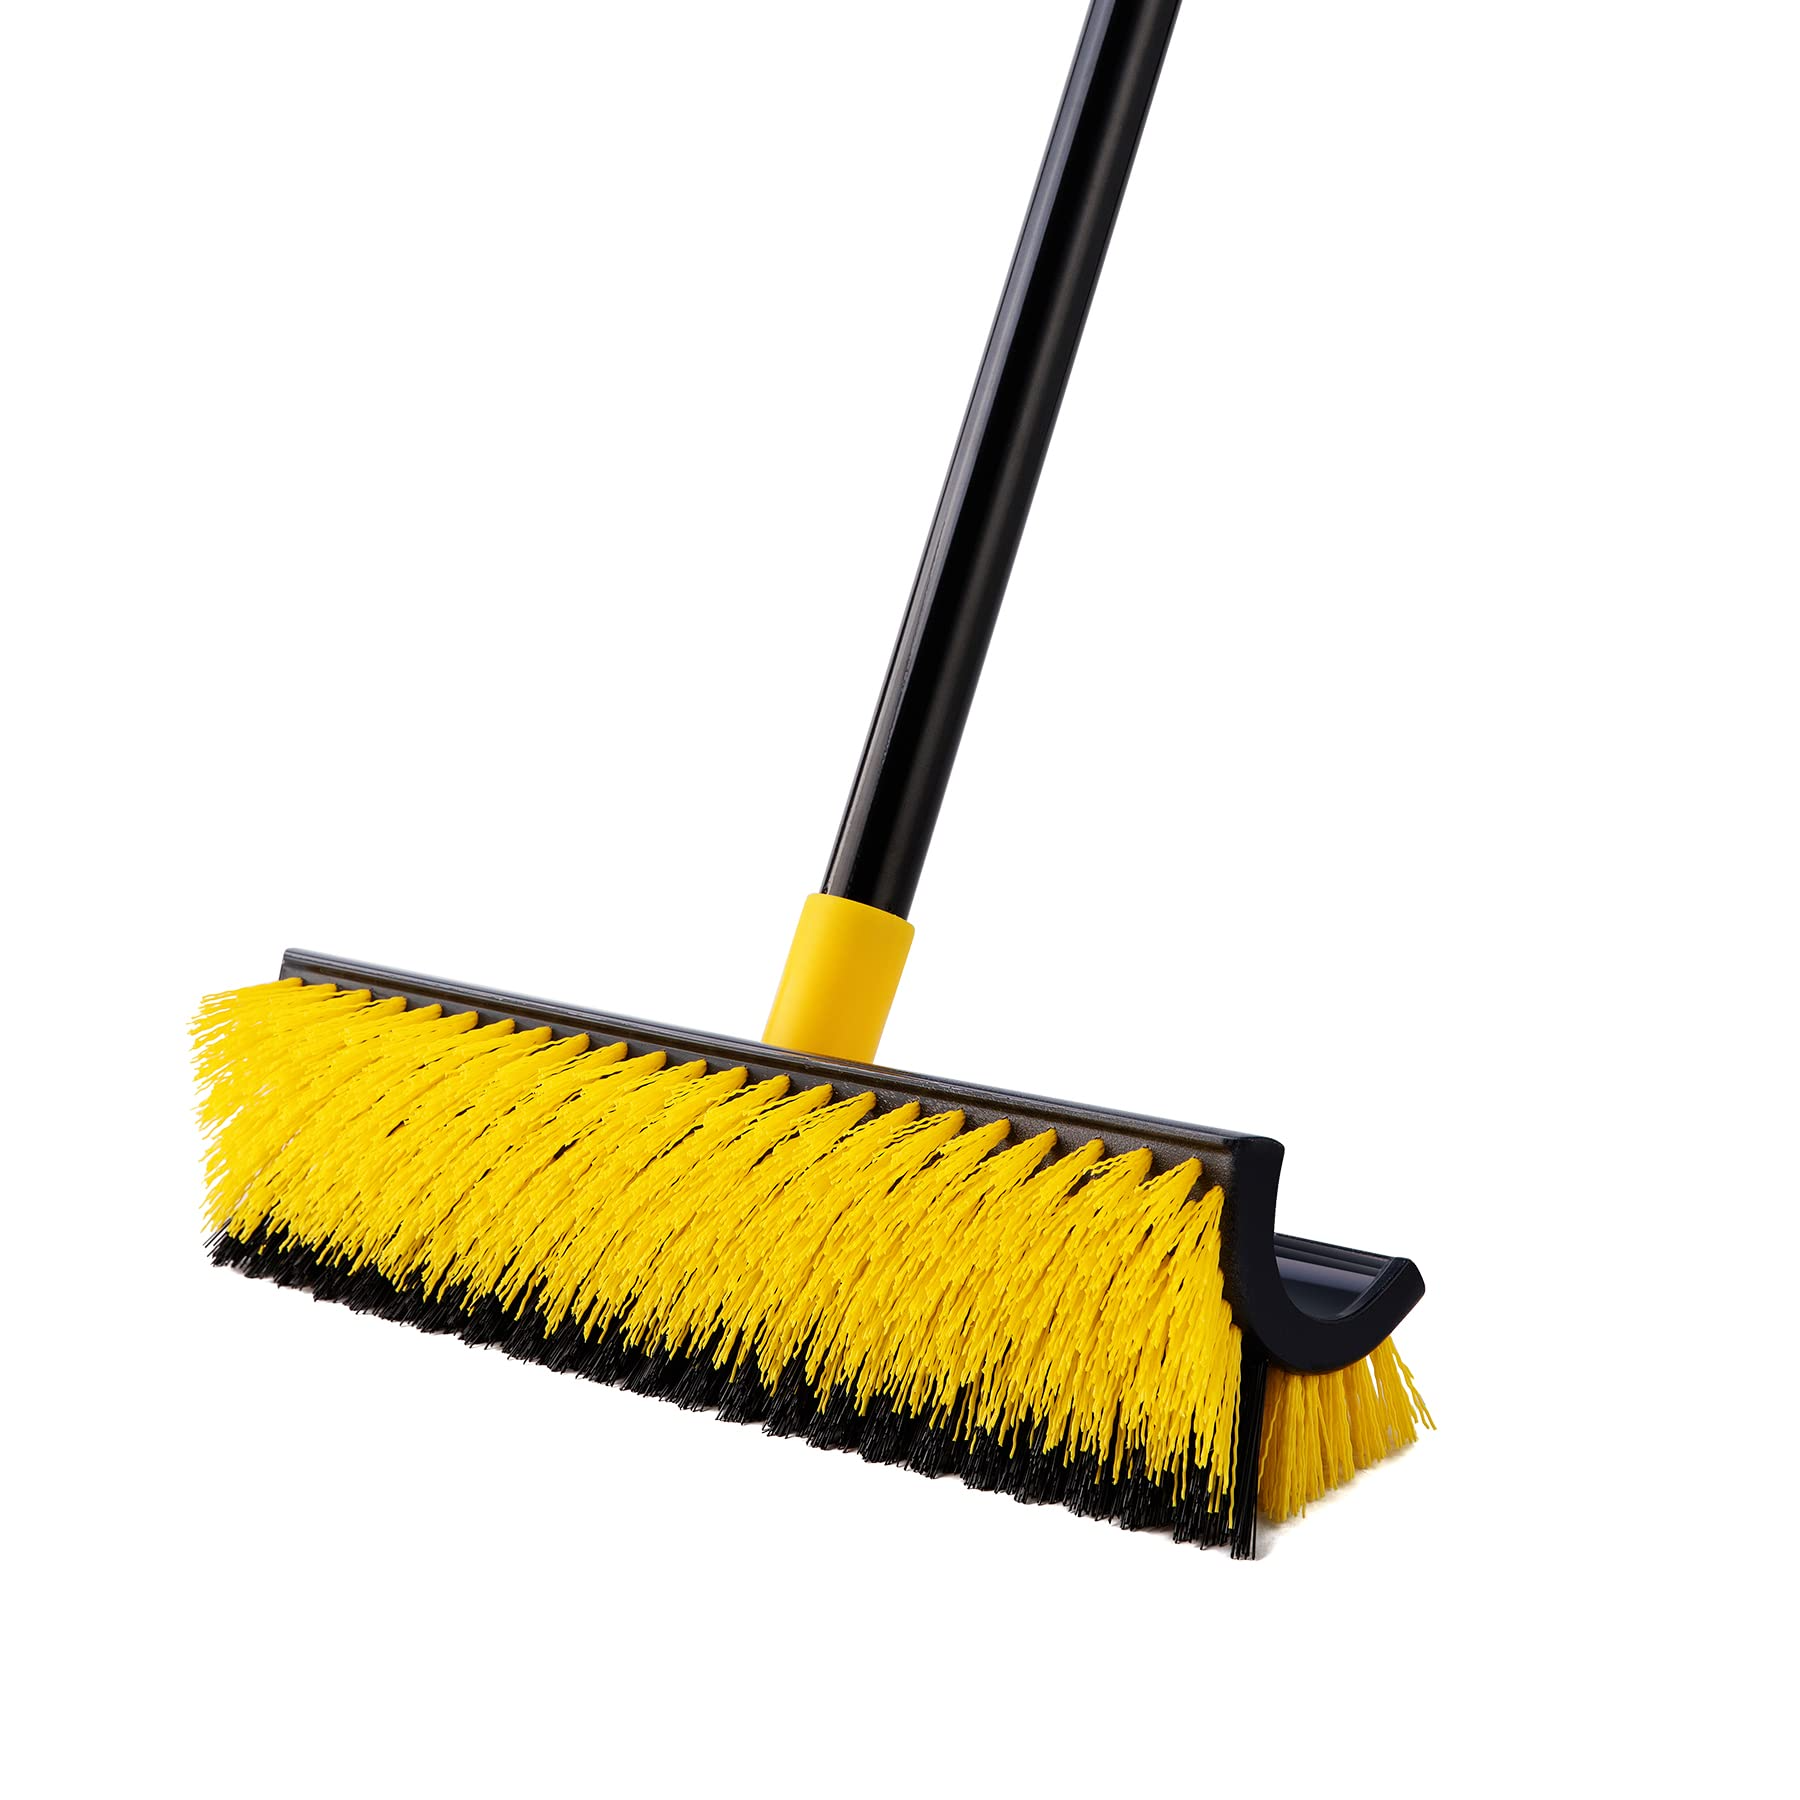 O Cedar® General Purpose Scrub Brush